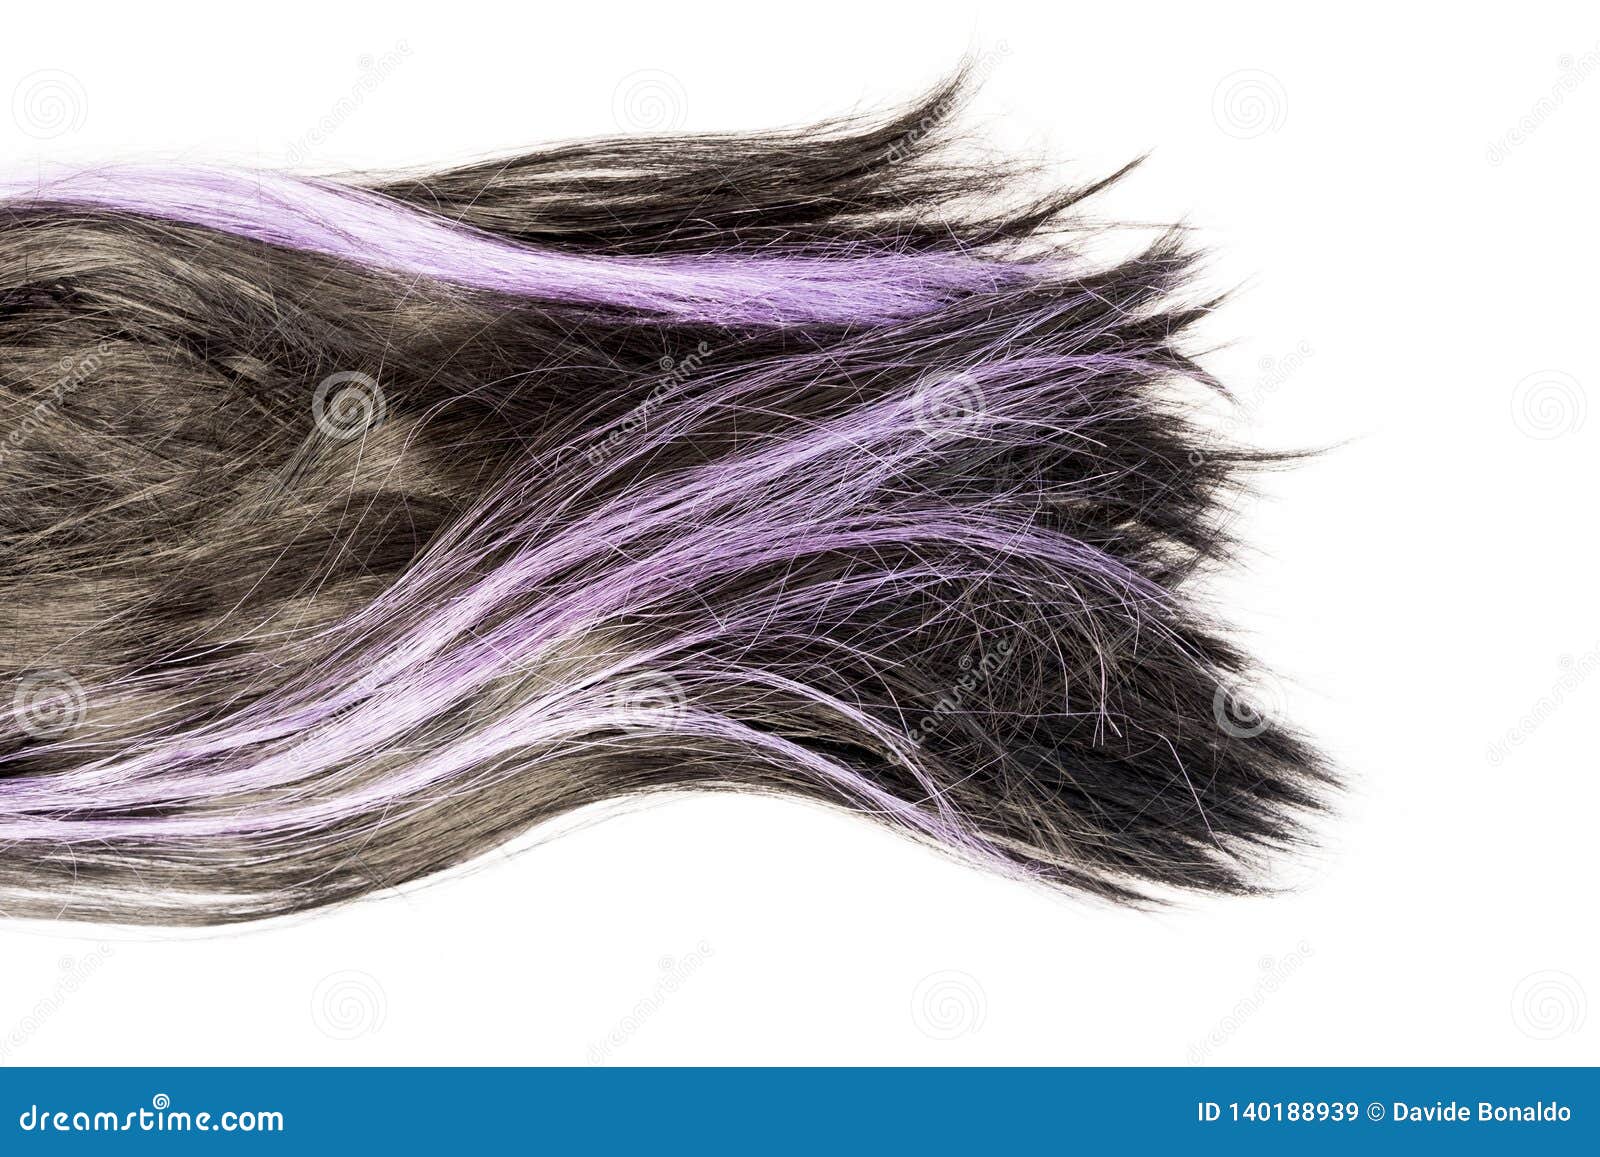 Dark Black And Purple Hair On White Background Stock Image Image